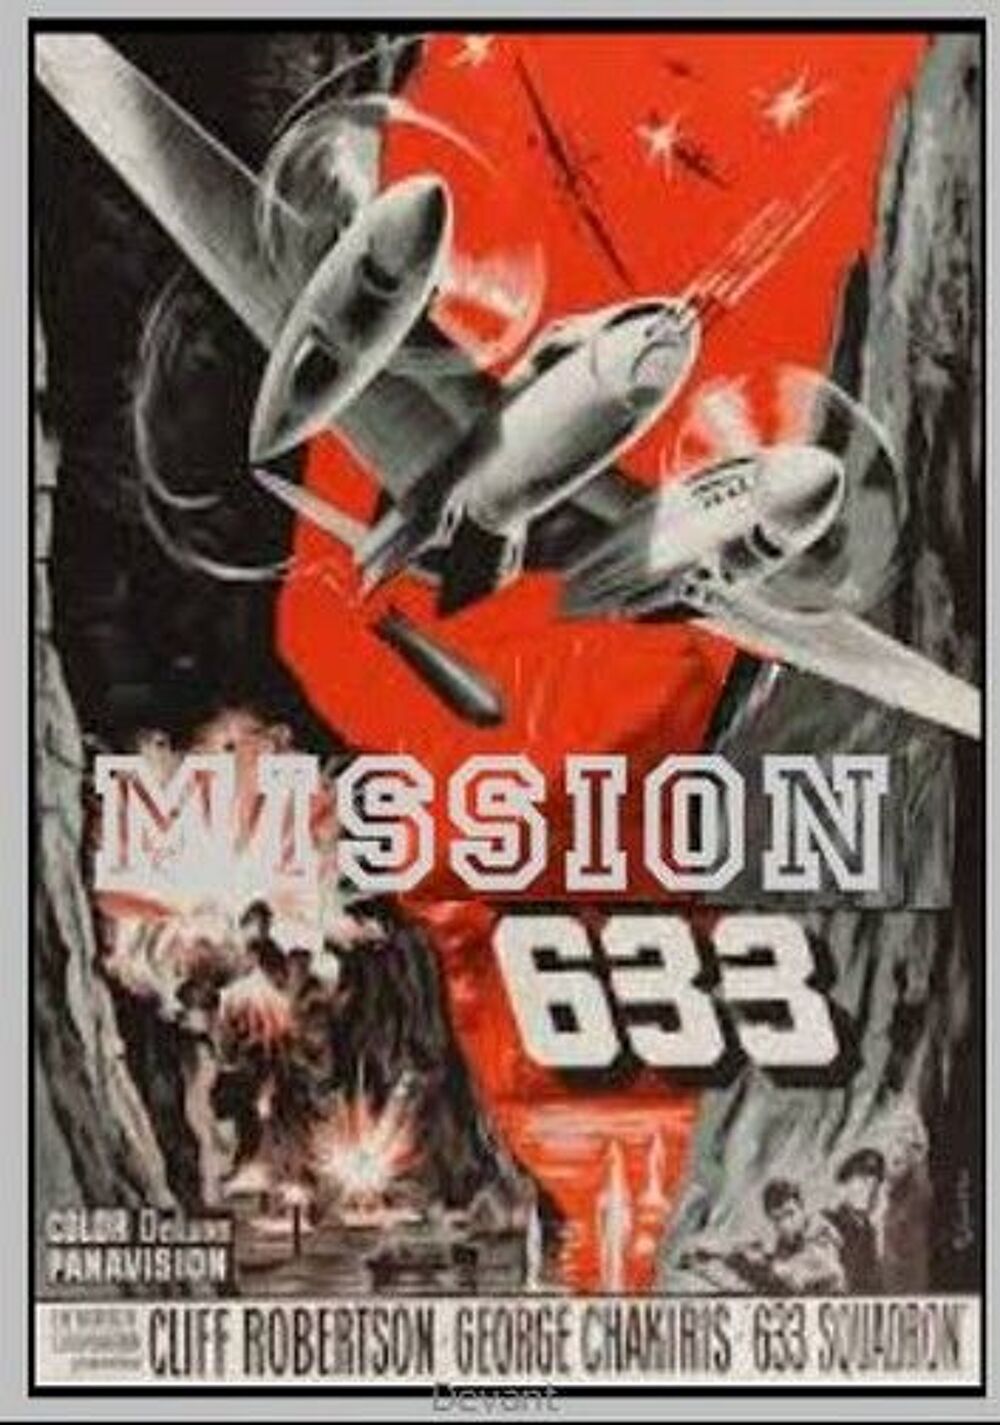 MISSION 633 avec c robertson g chakiris Paypal accept&eacute; DVD et blu-ray